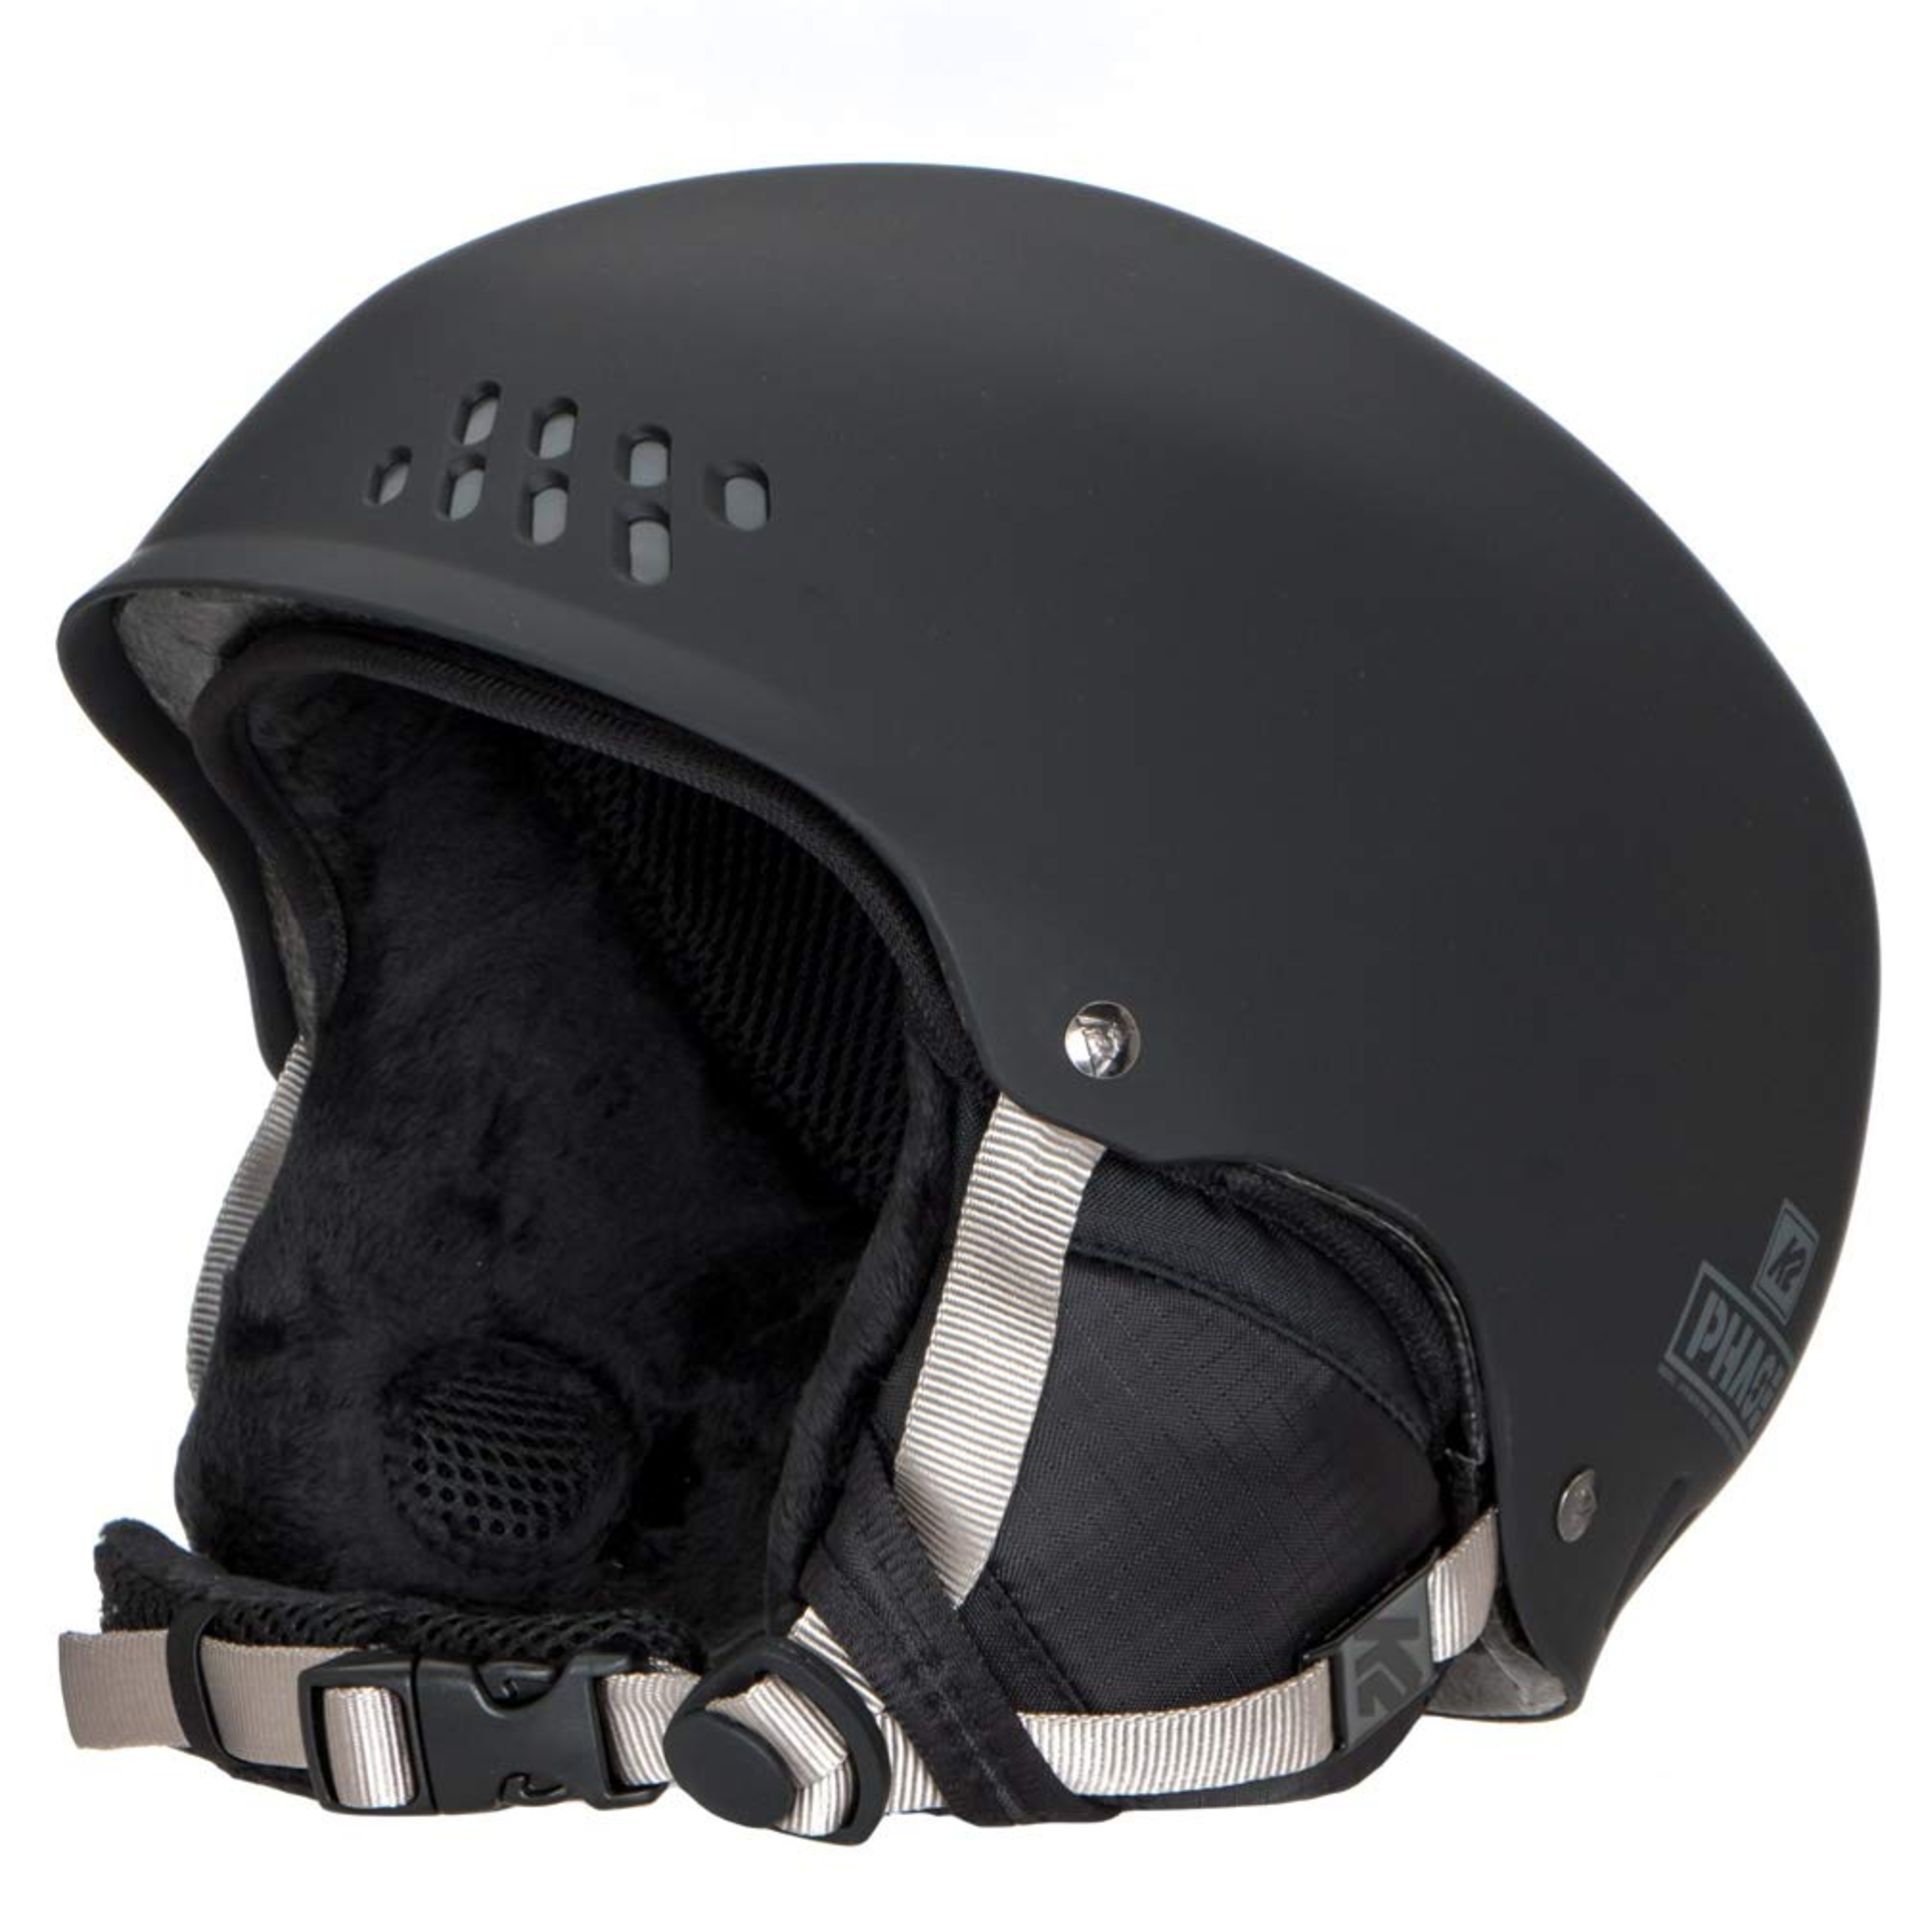 Brand new K2 Phase Pro Men's Ski Helmet Size S RRP £129.99